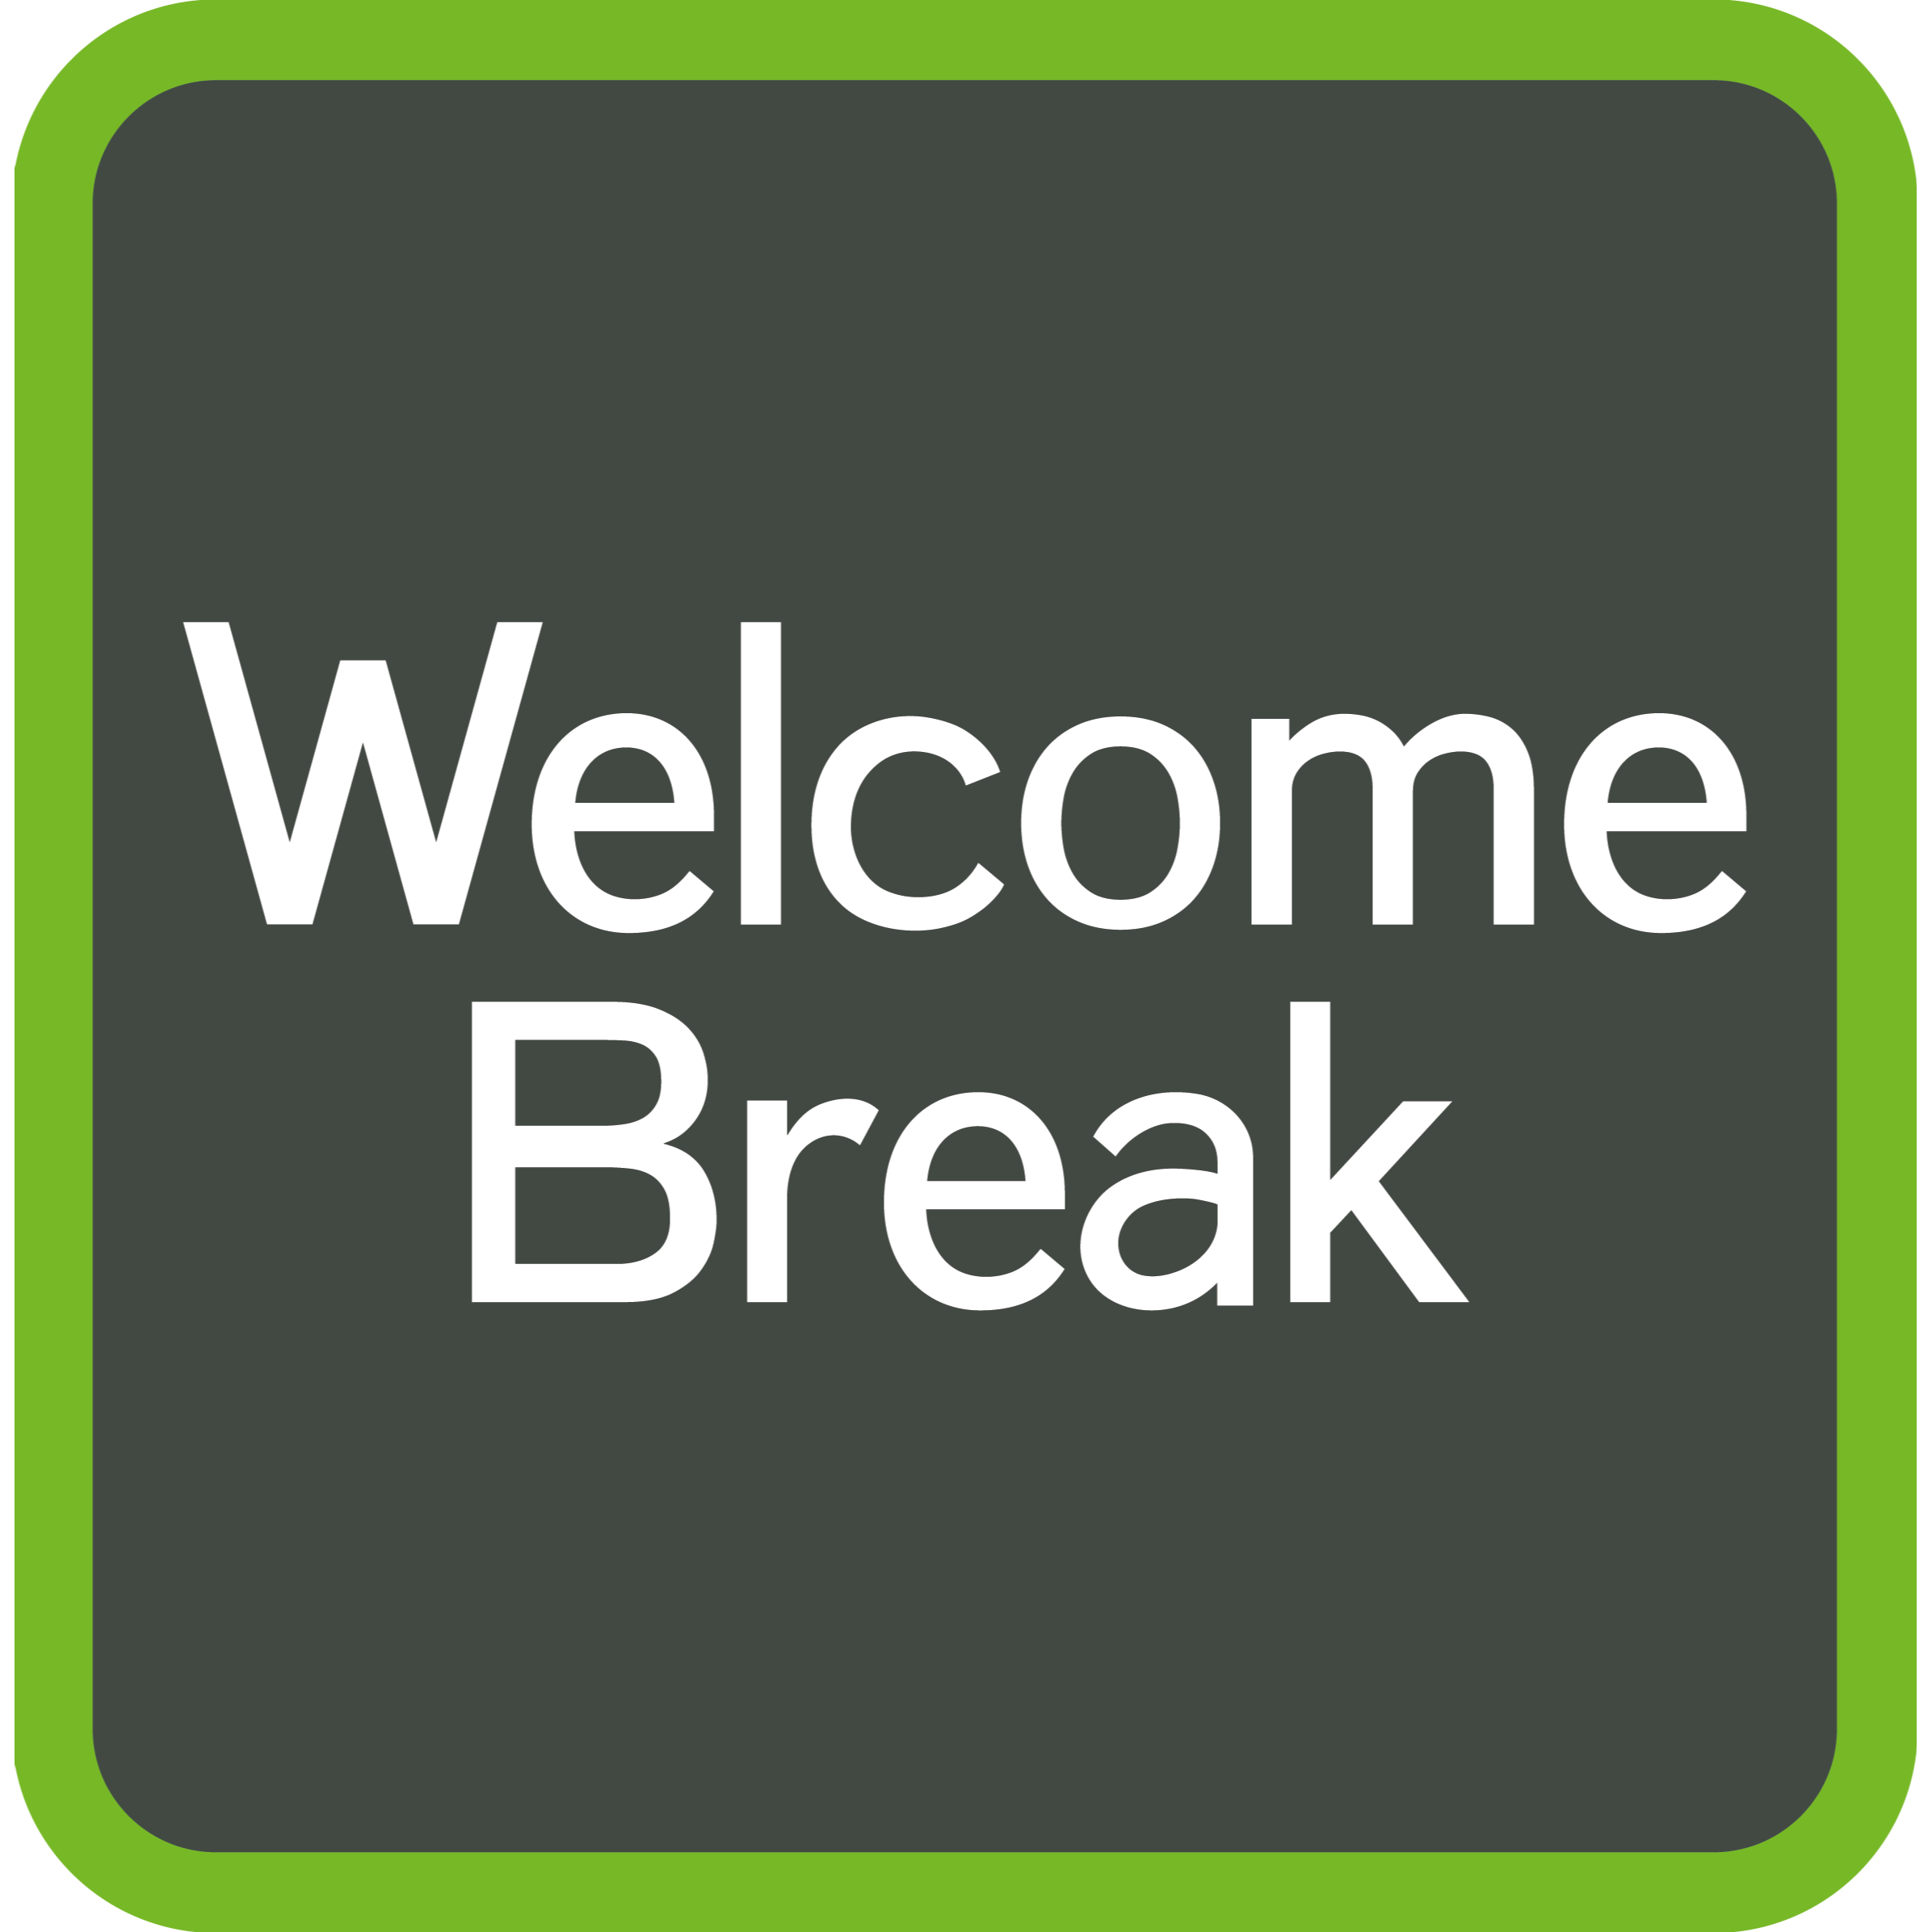 Welcome Break Logo Applegreen Cromwell Services A1 Newark 01908 299700